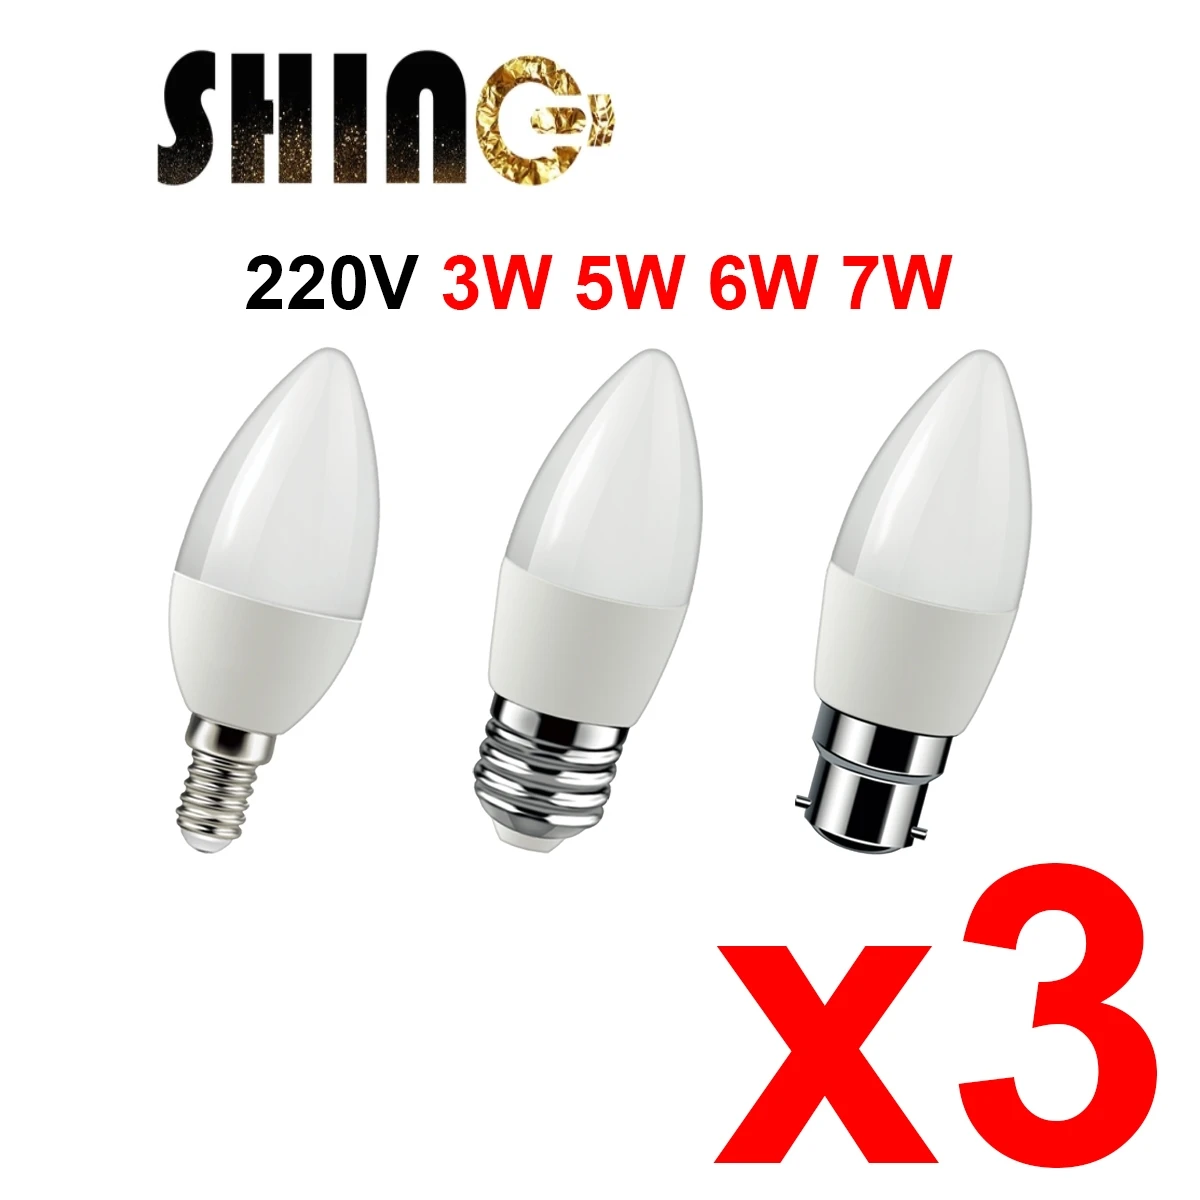 

3PCS Led Candle Bulb C37 3W 5W 6W 7W E14 220v-240v 3000K 4000K 6000k For Home Decoration Lamp